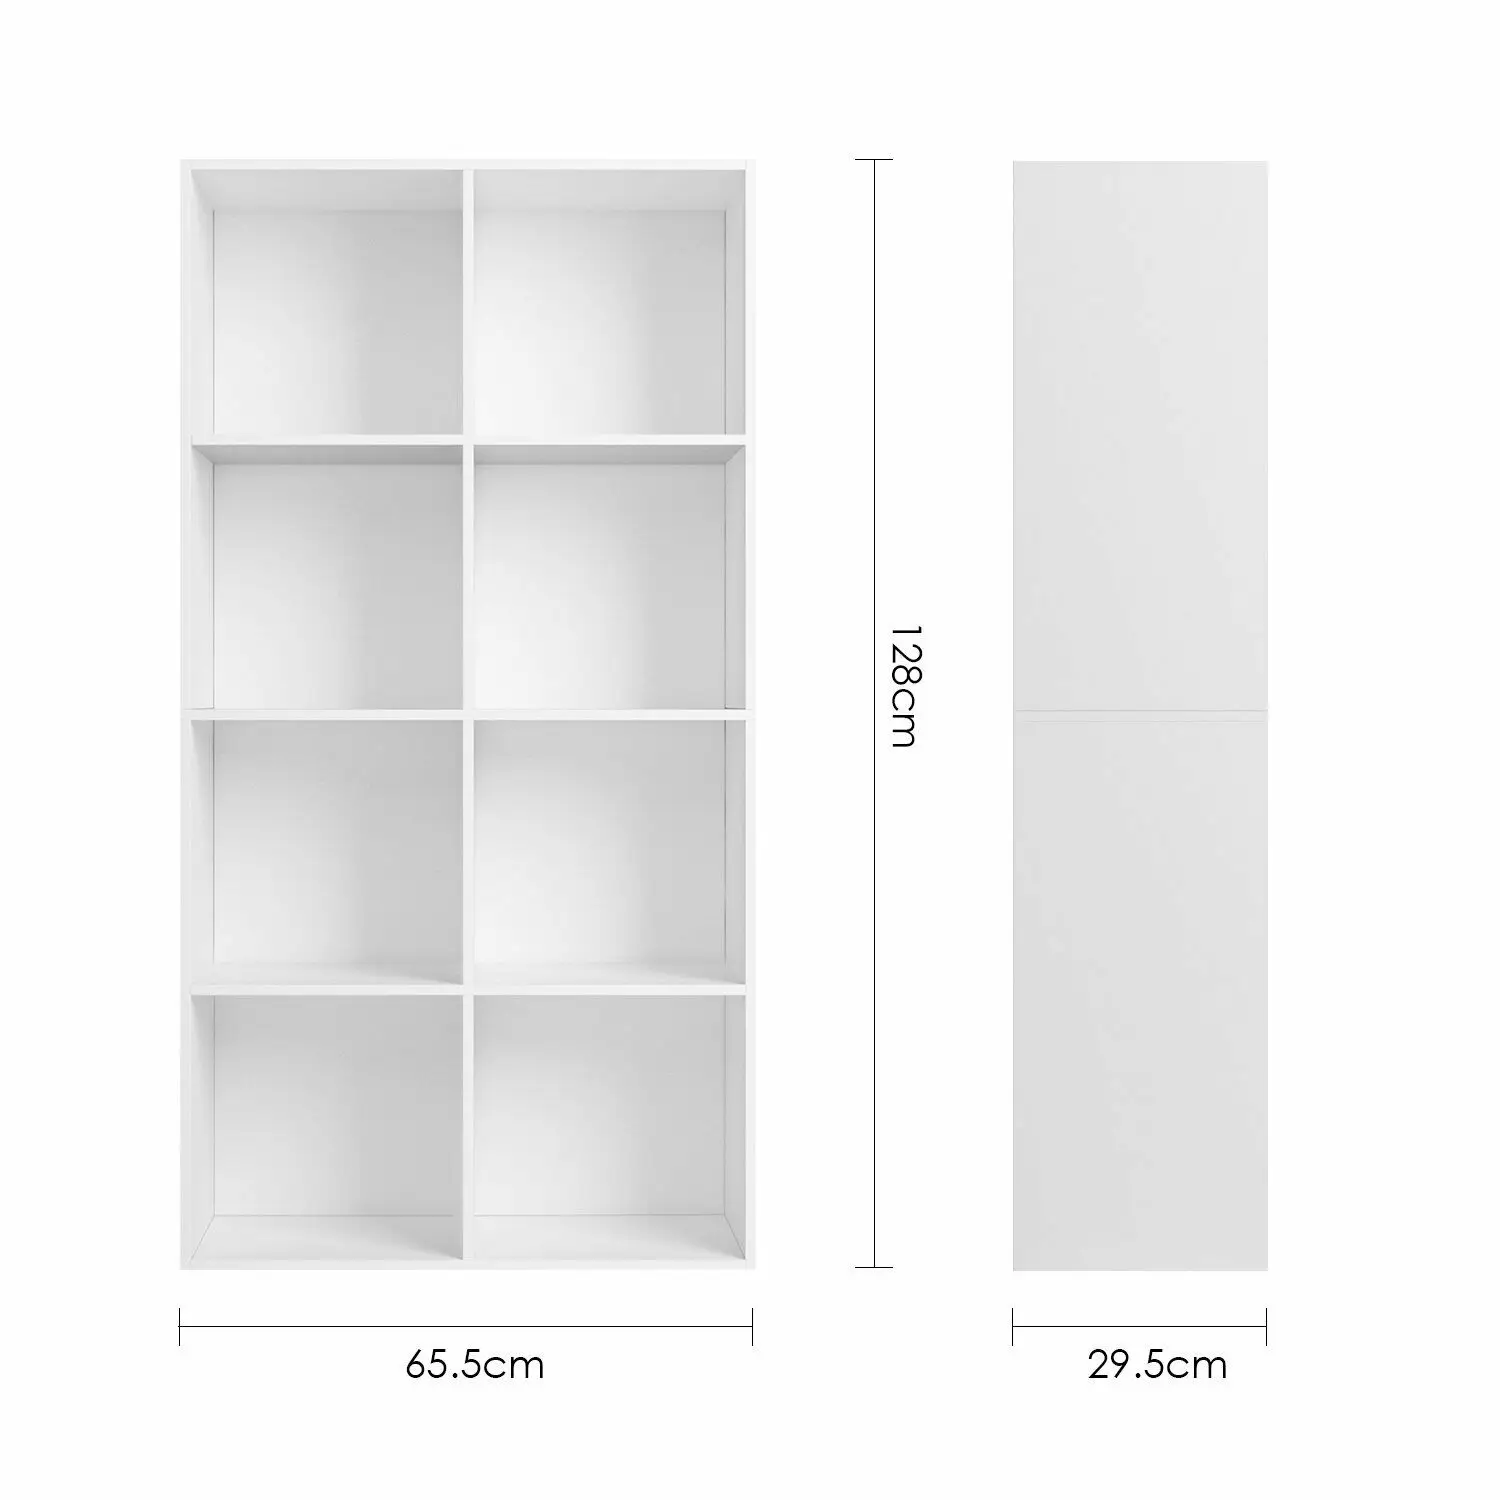 8 Cube Bookshelf Storage Bin Book Display Shelving Unit Organizer 3